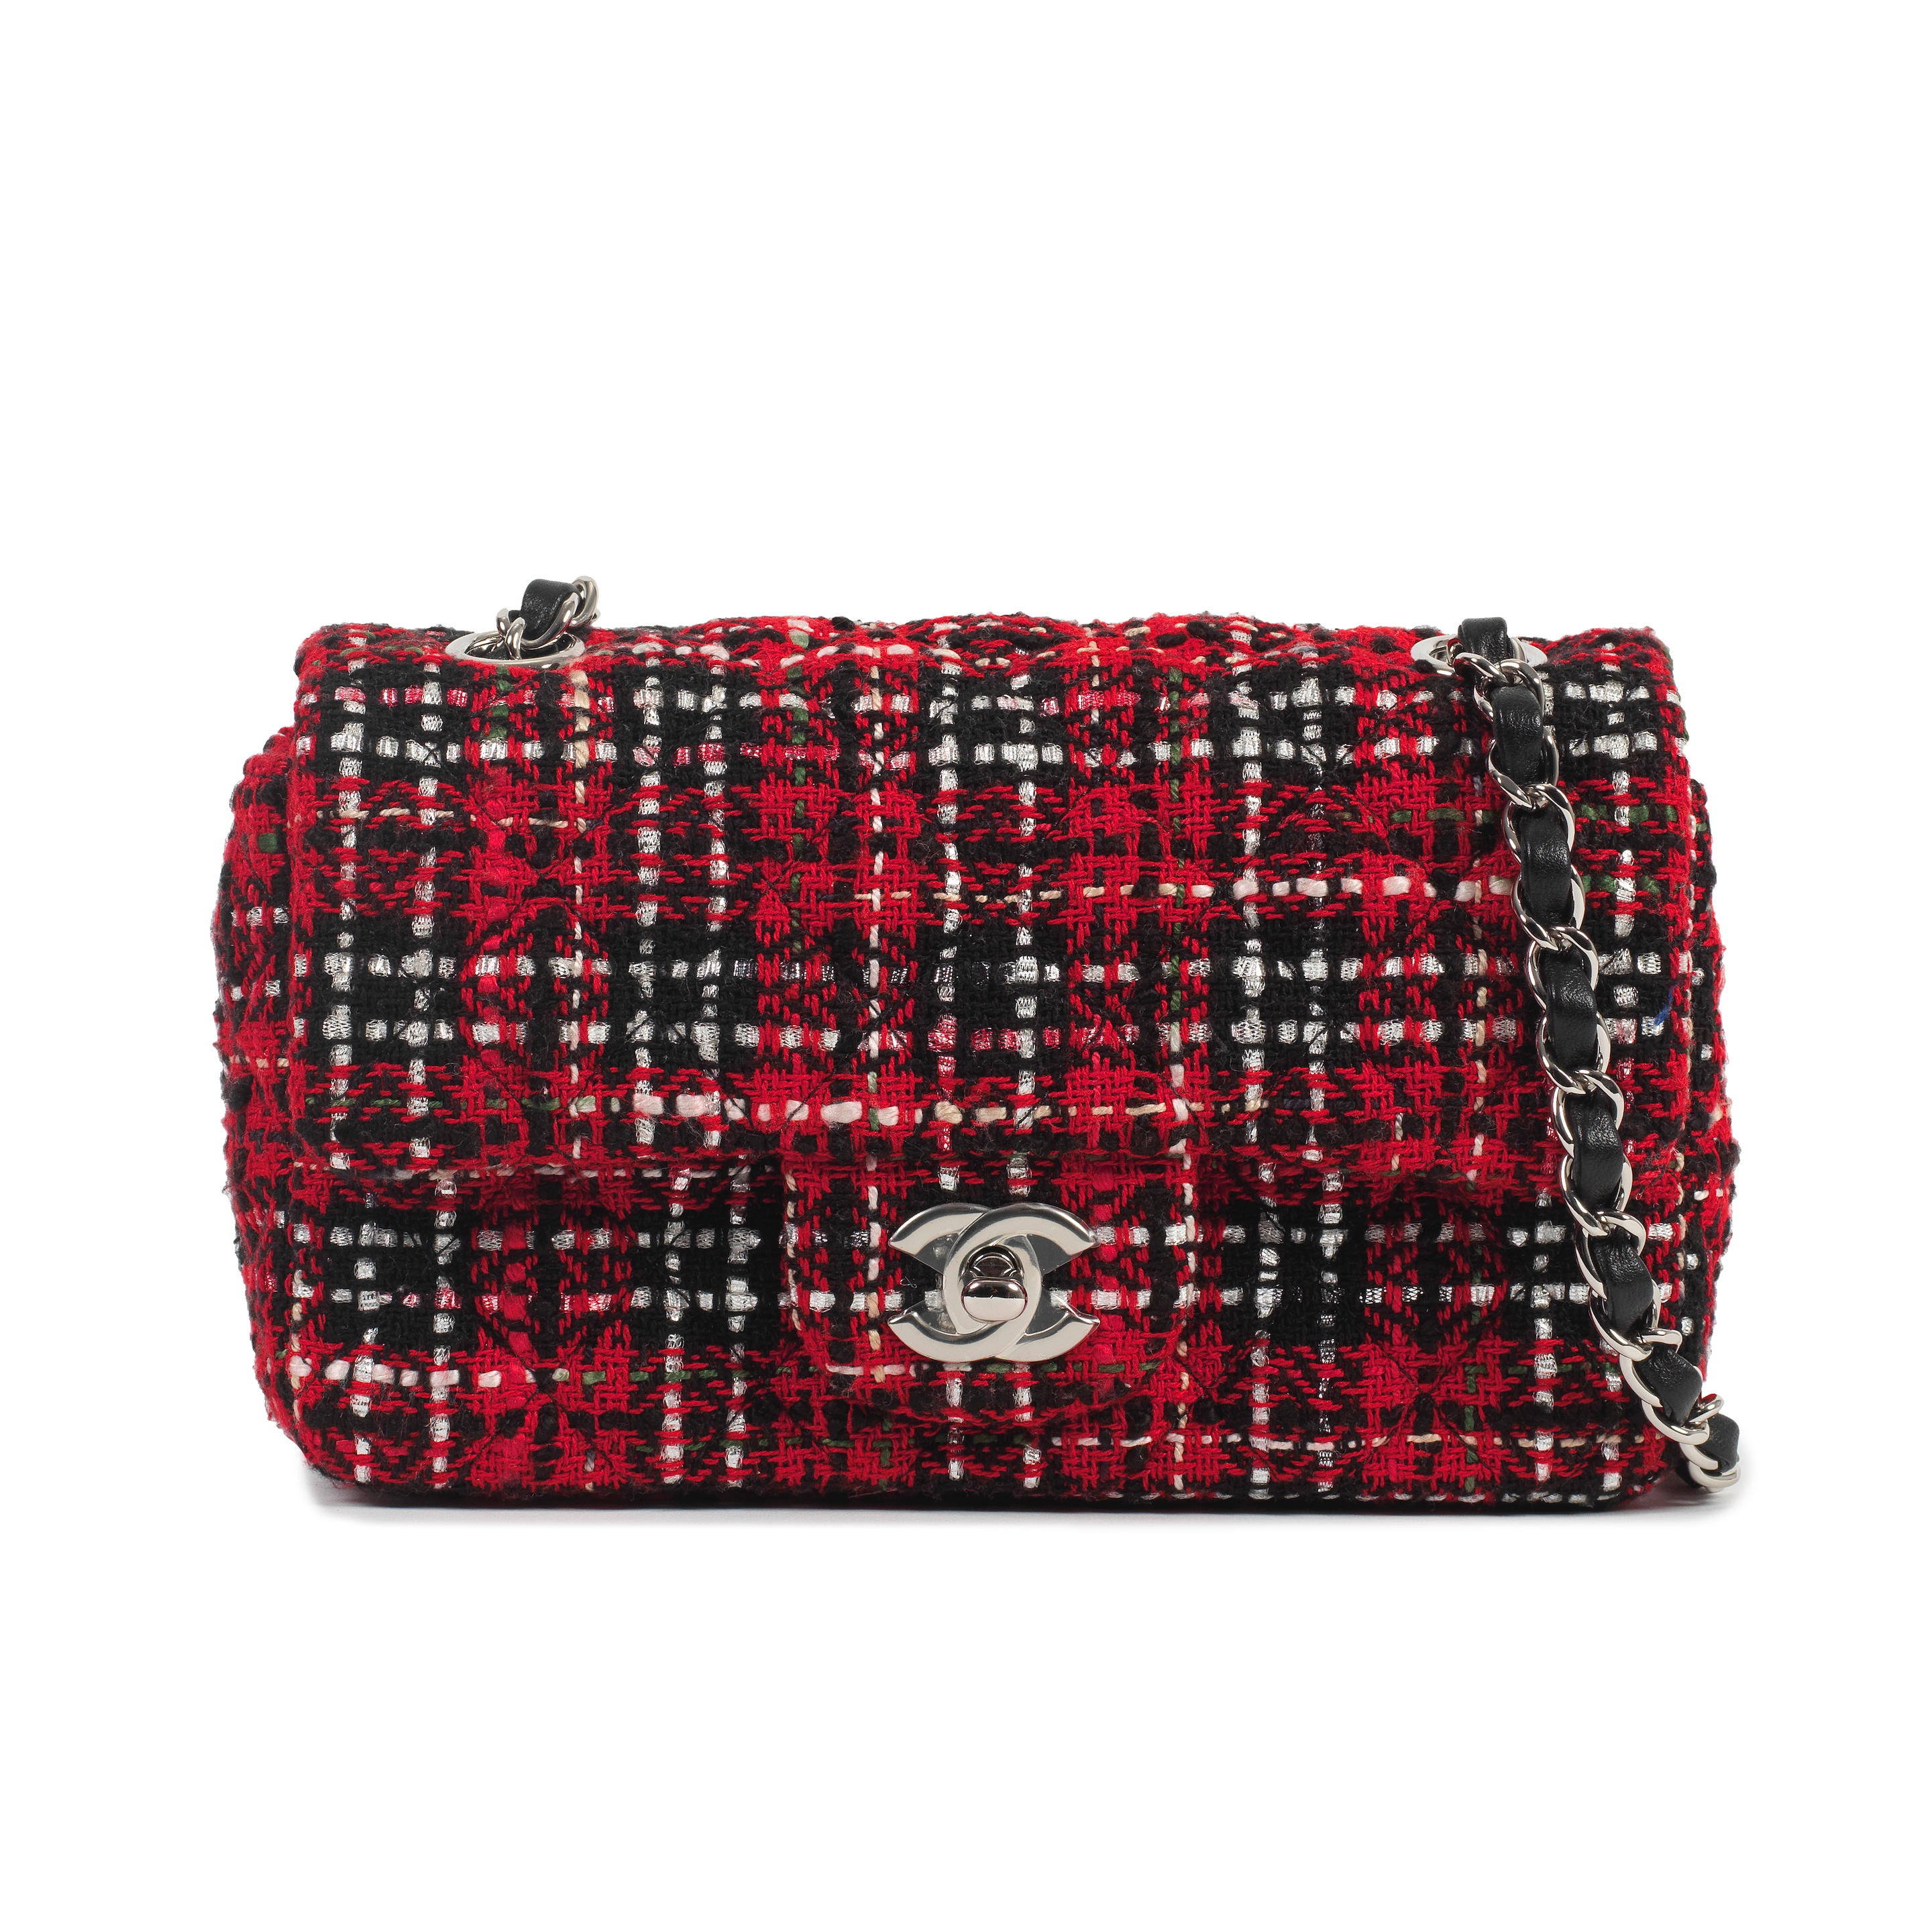 Virginie Viard for Chanel a Red Tweed Mini Flap Bag  - Bonhams